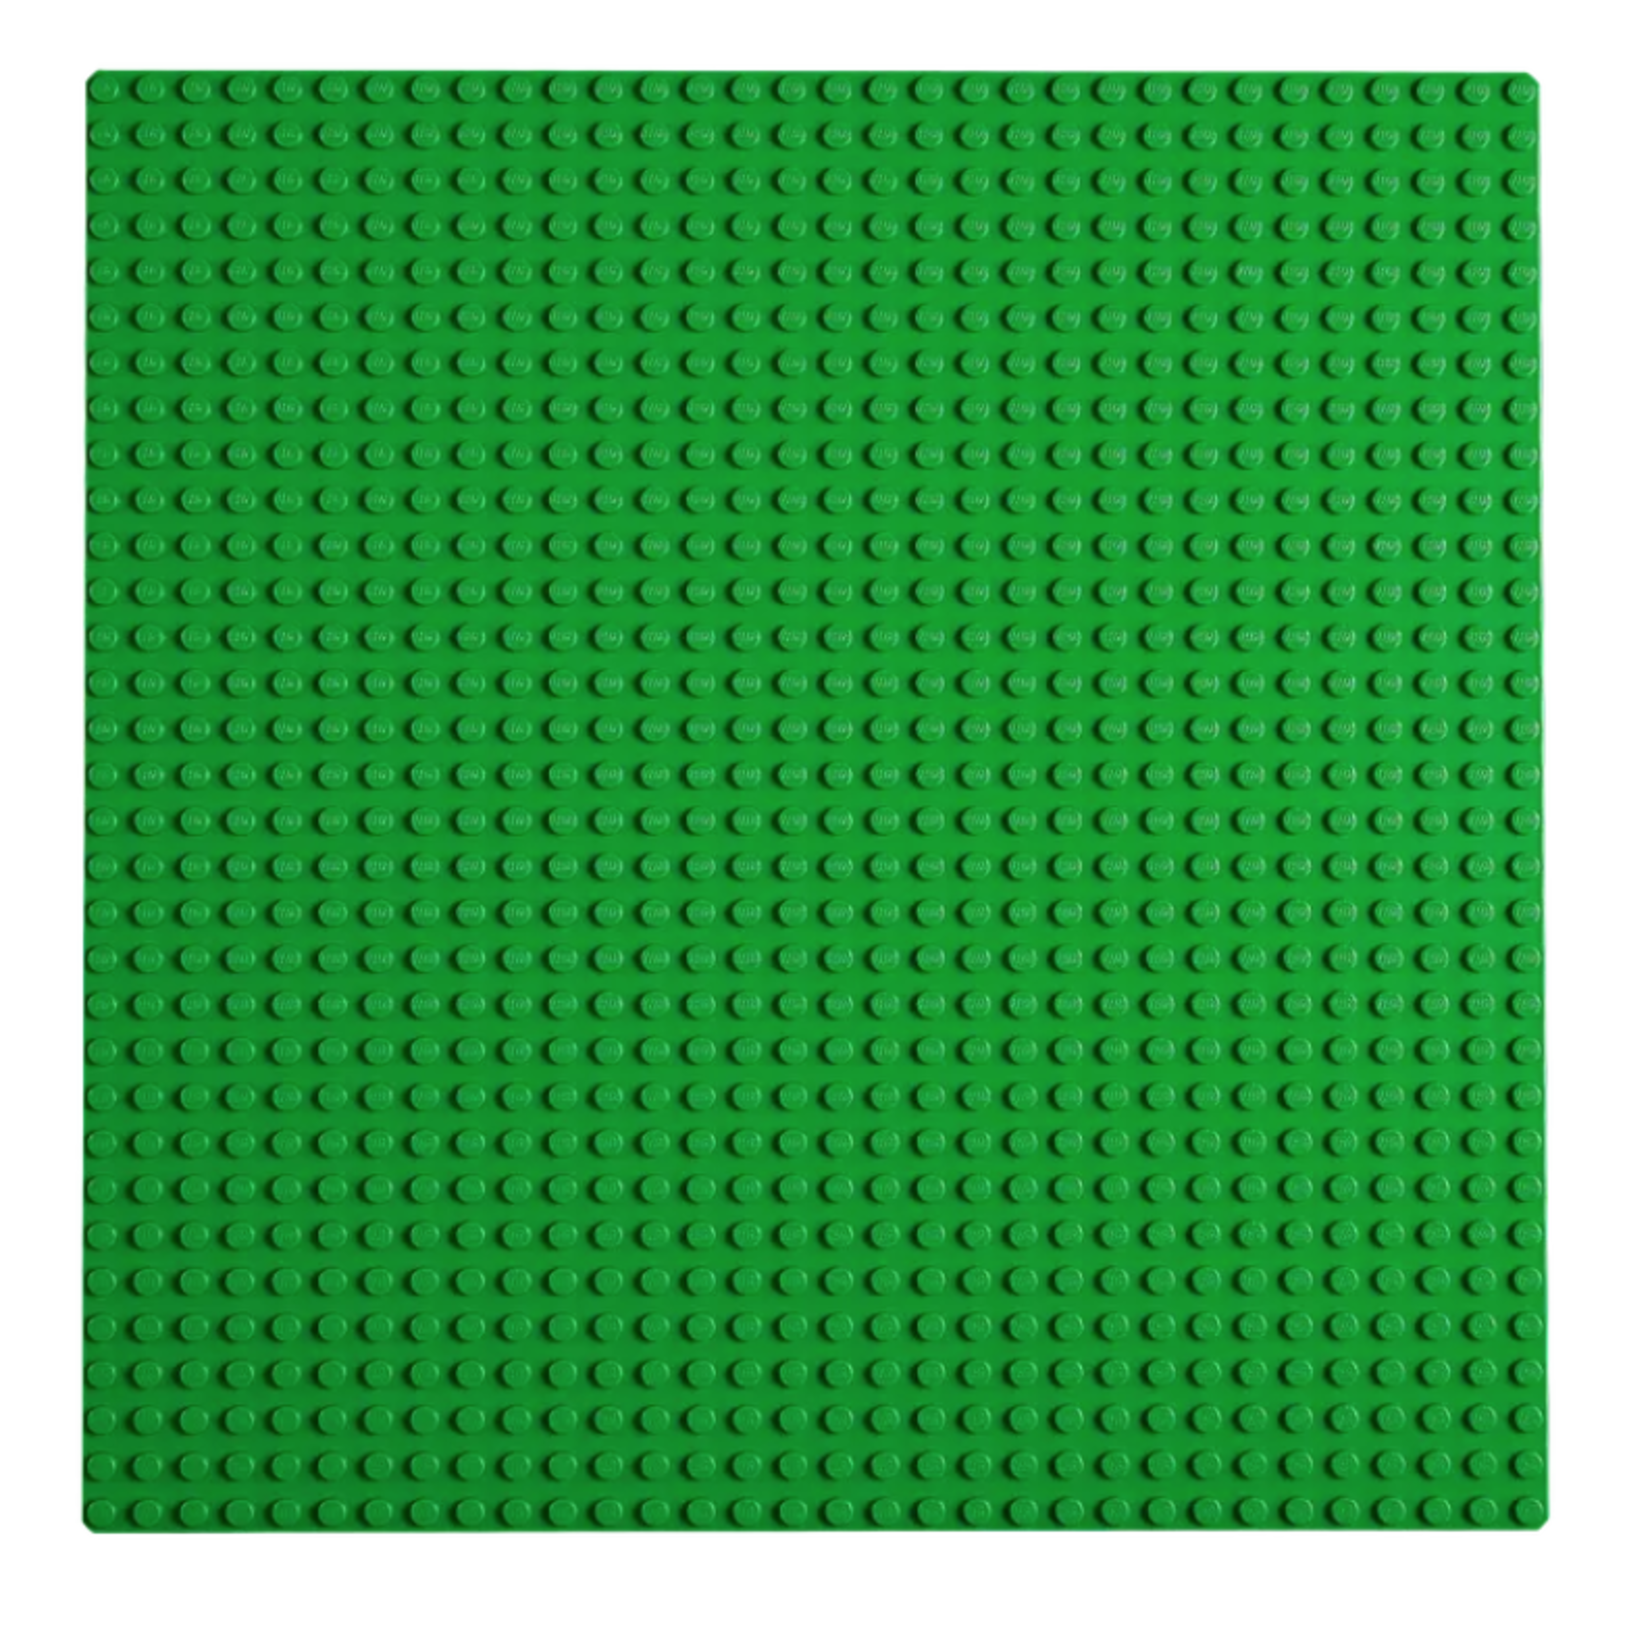 LEGO LEGO Classic Green Baseplate